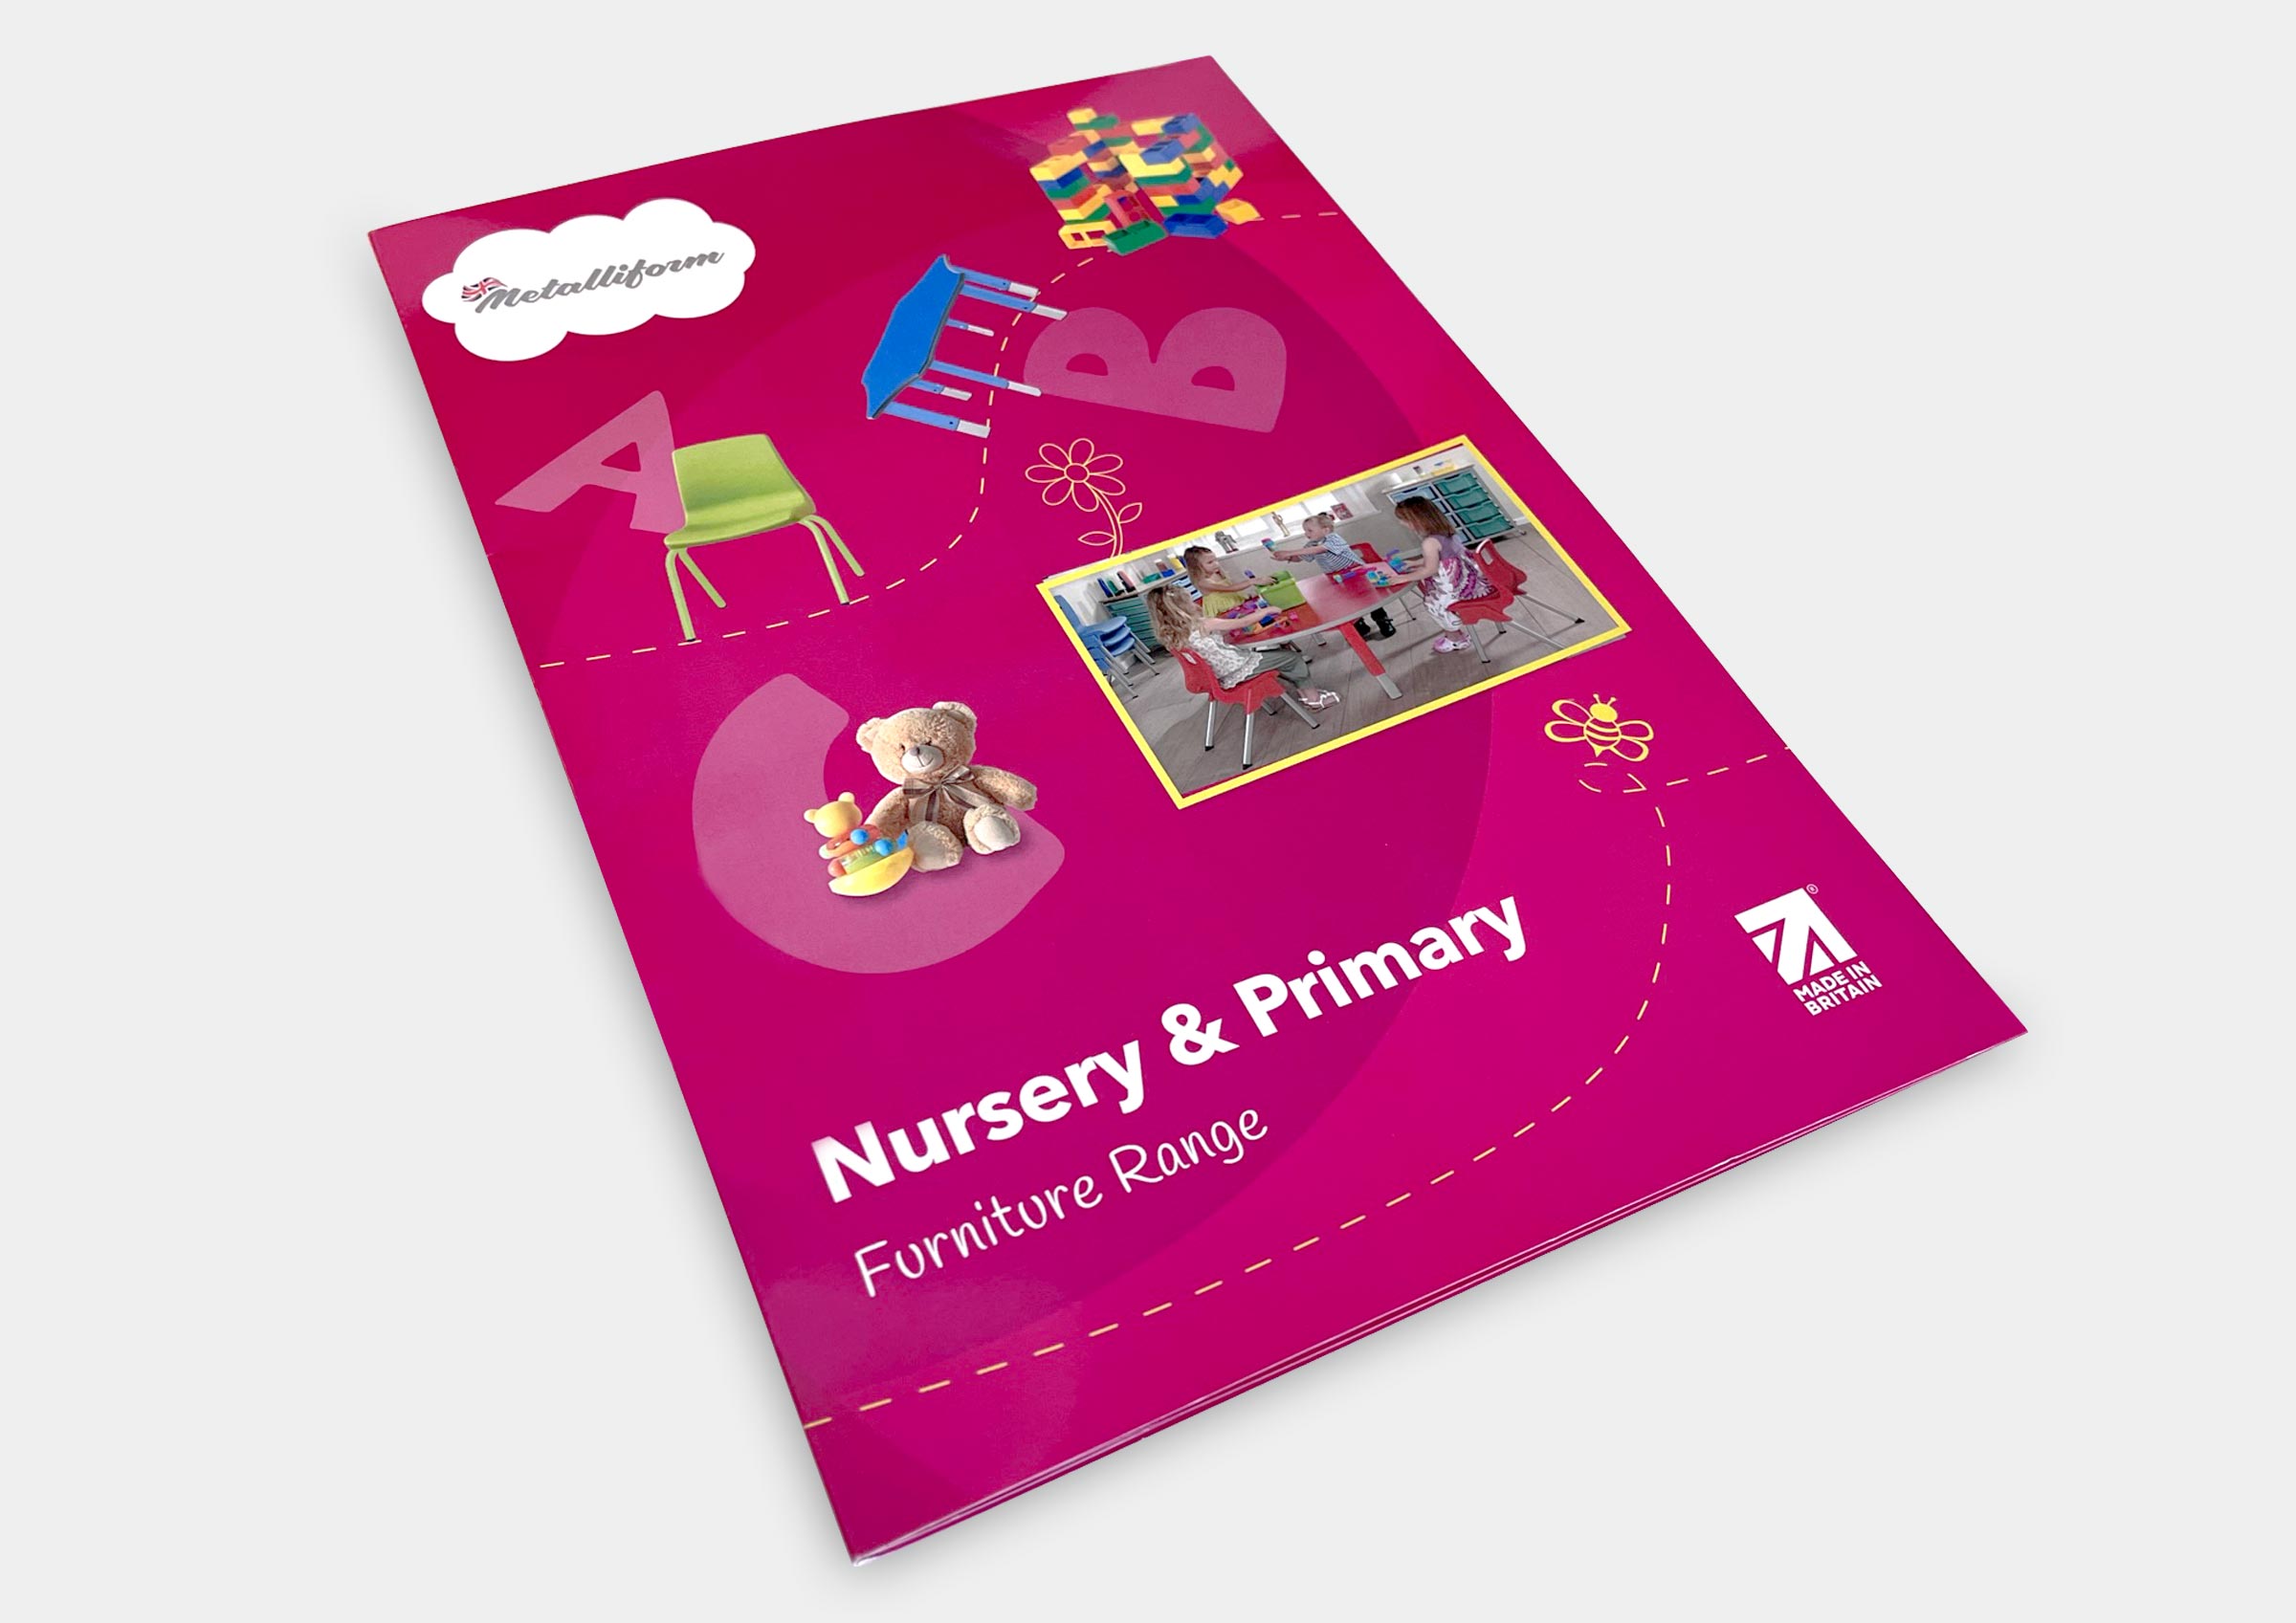 Nursery and primary school furniture range brochure